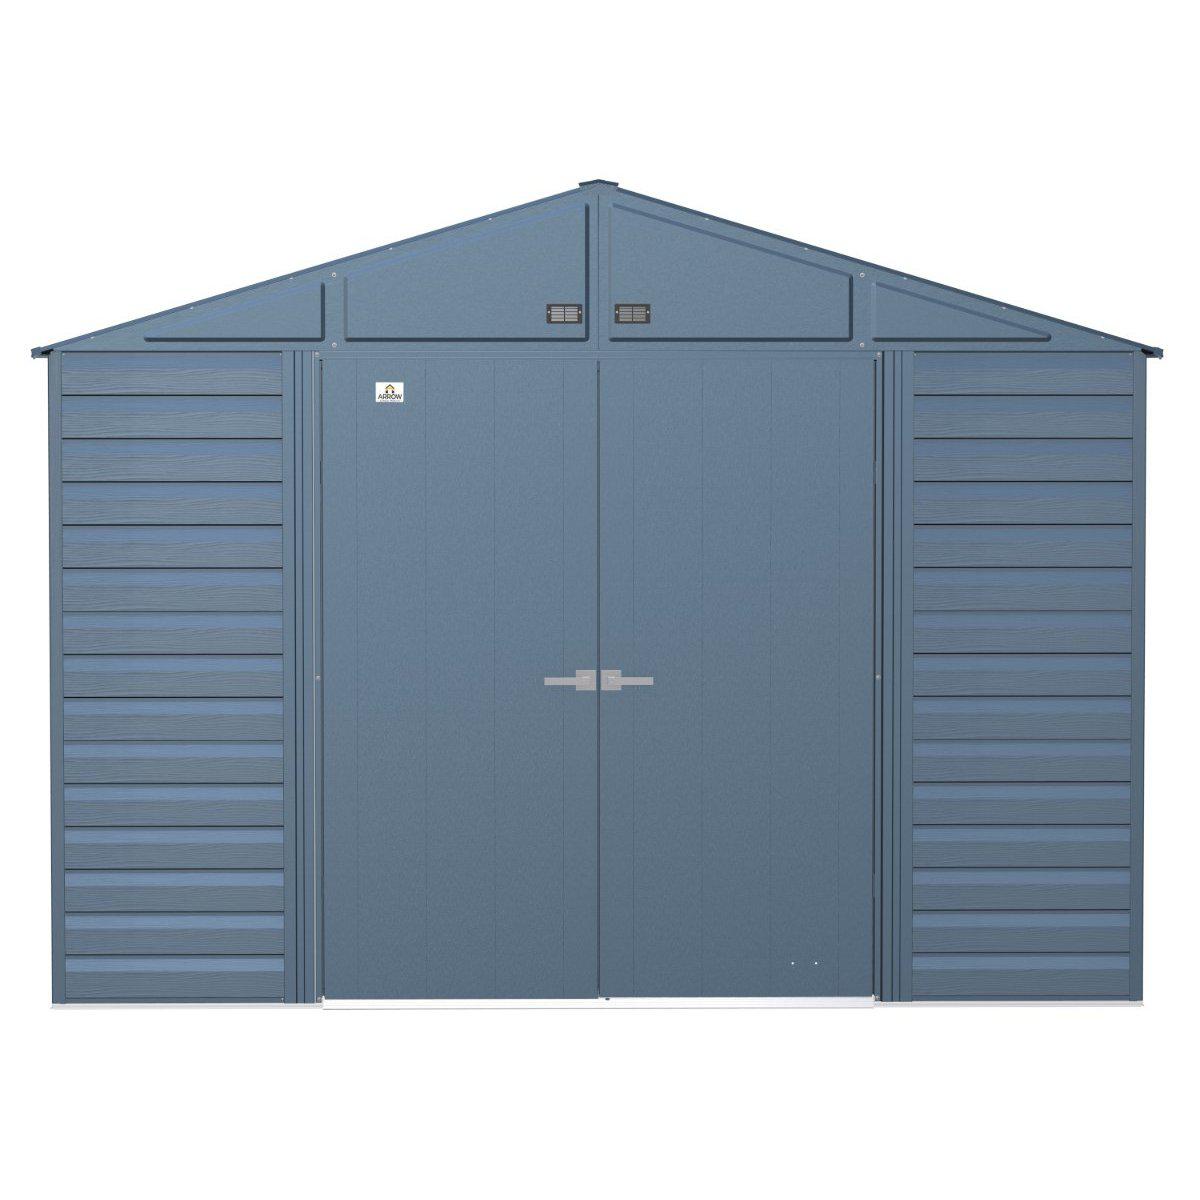 Arrow Select Steel Storage Shed 10 x 12 ft. - Delightful Yard